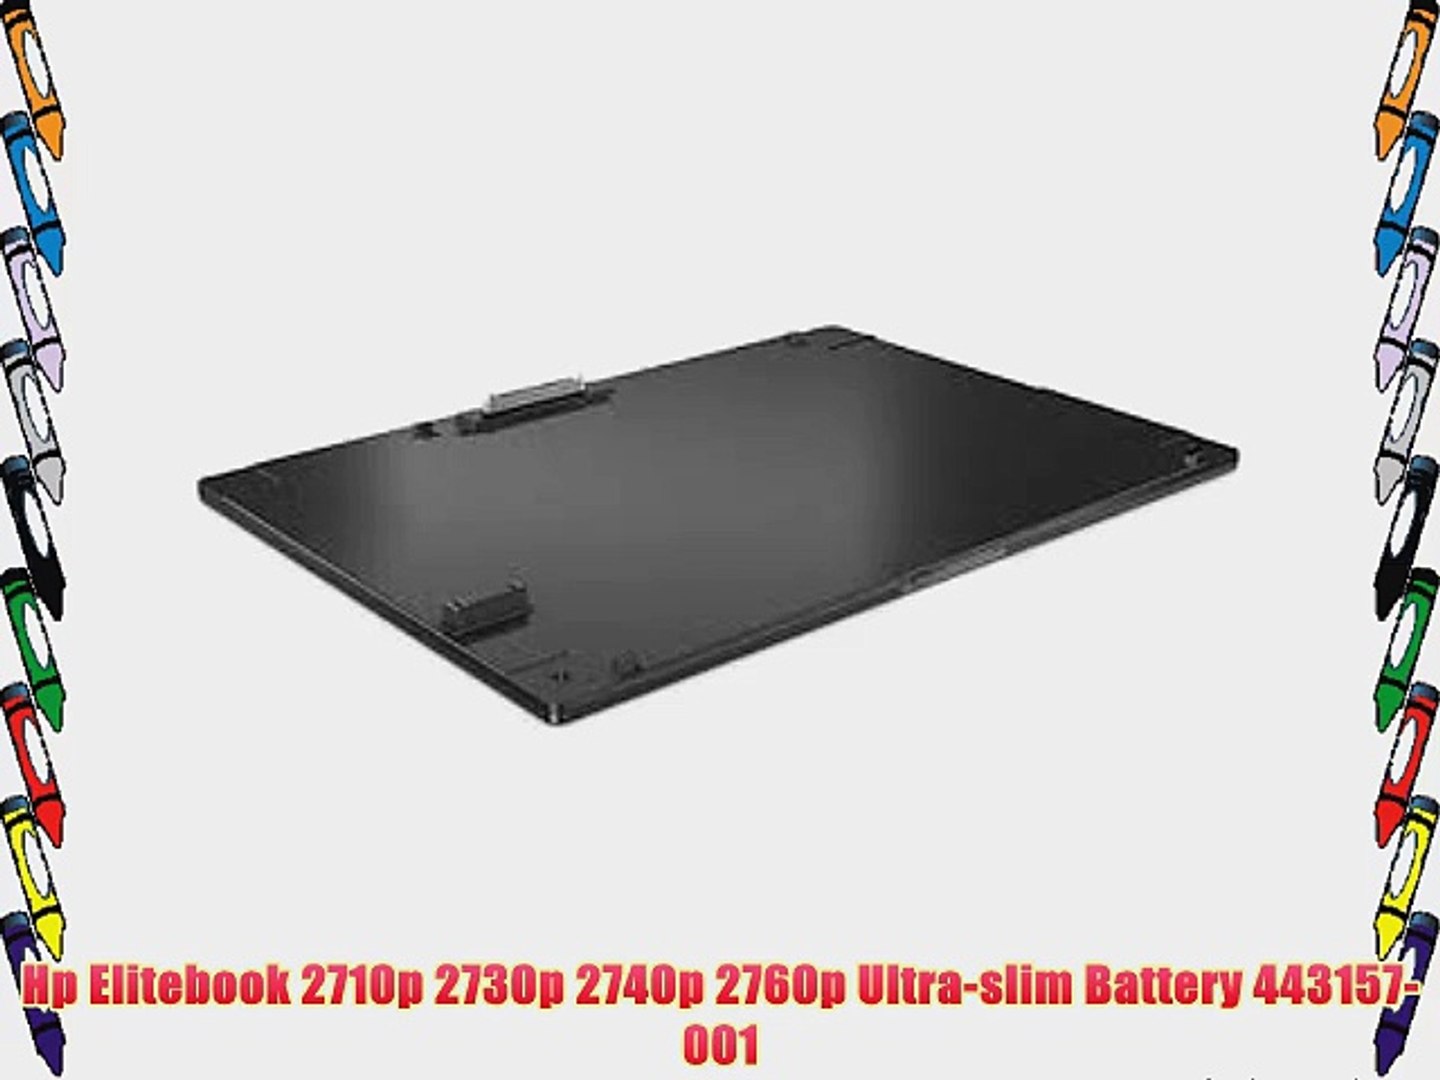 Hp Elitebook 2710p 2730p 2740p 2760p Ultra-slim Battery 443157-001 - video  Dailymotion